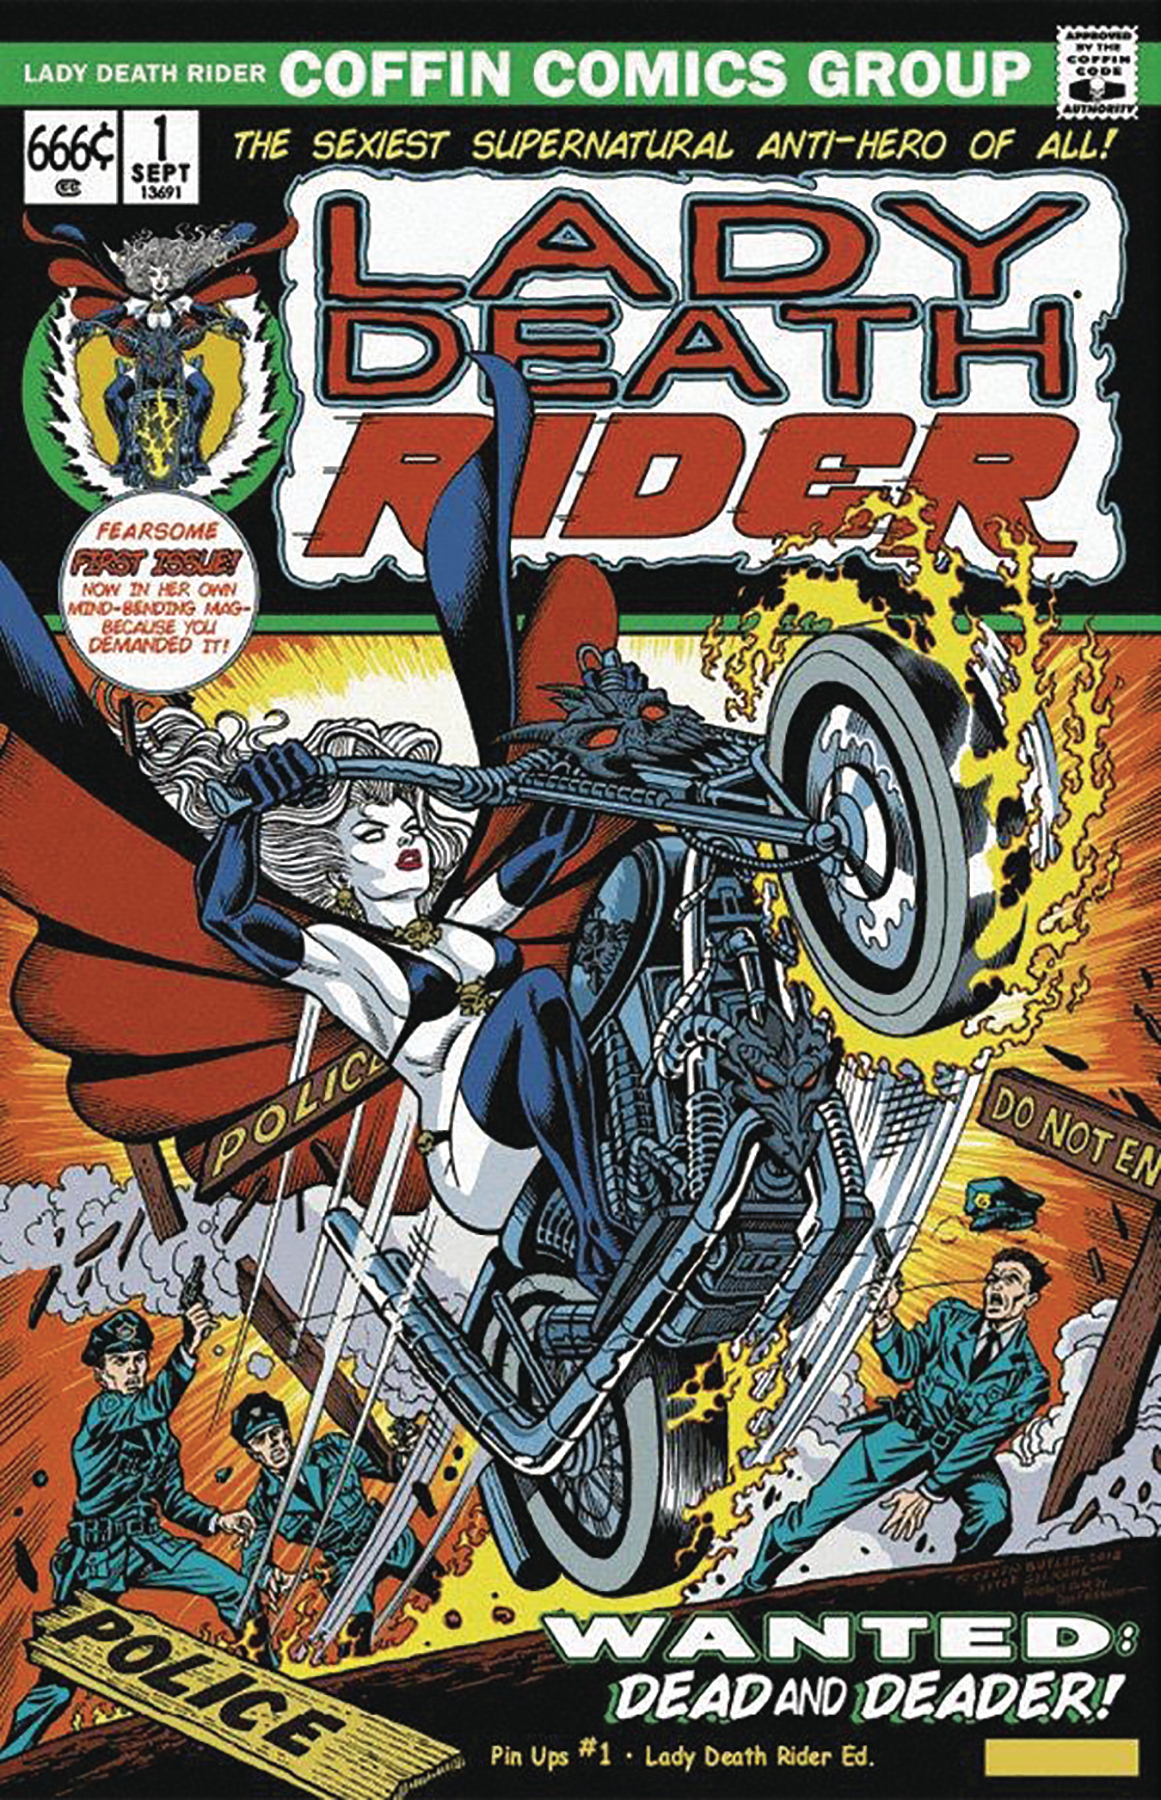 Lady Death Pin Ups No. 1 (Death Rider Ed) (2018)